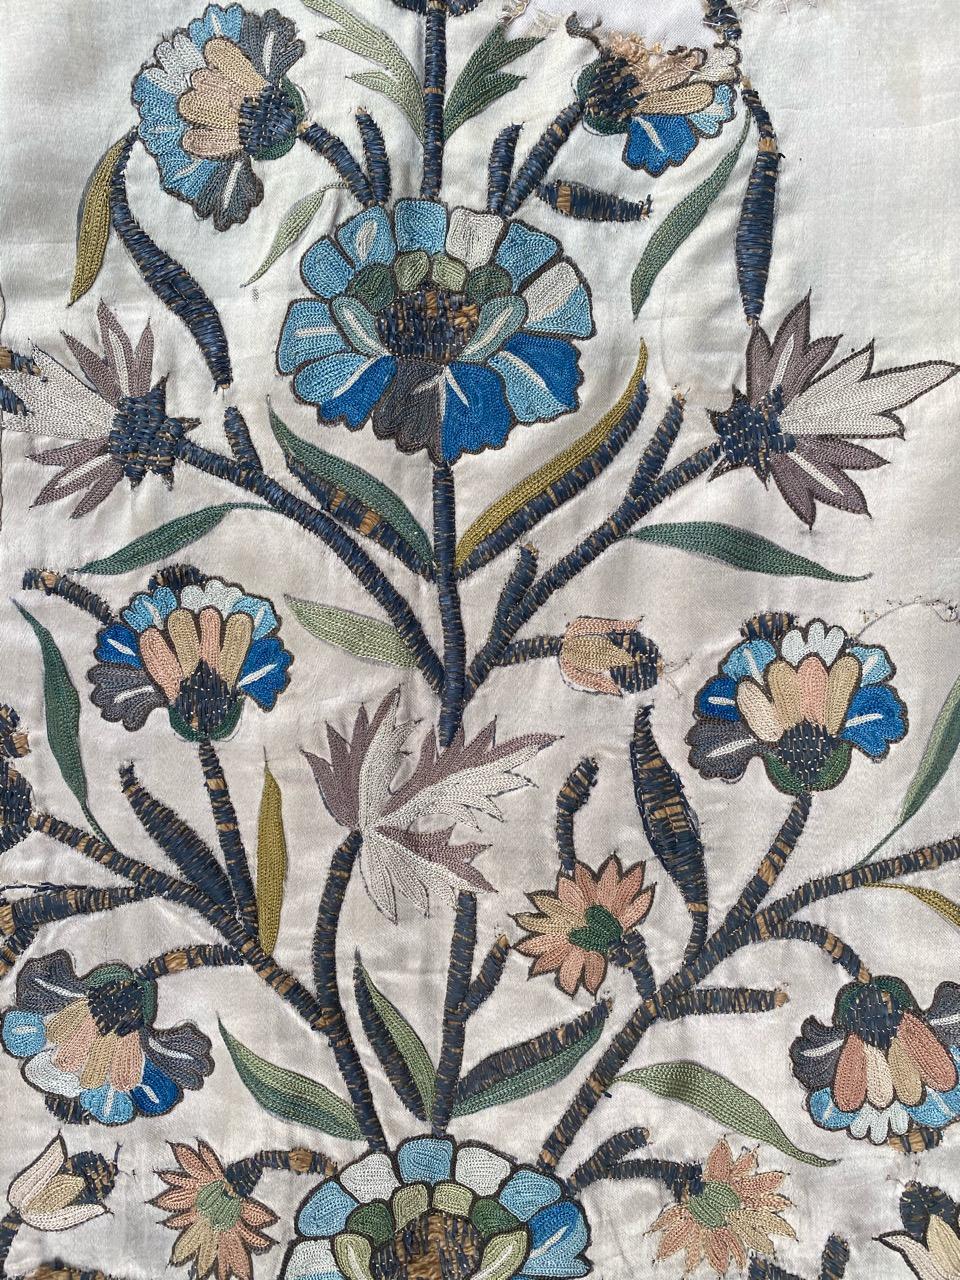 Silk Wonderful Antique Turkish Ottoman Embroidery